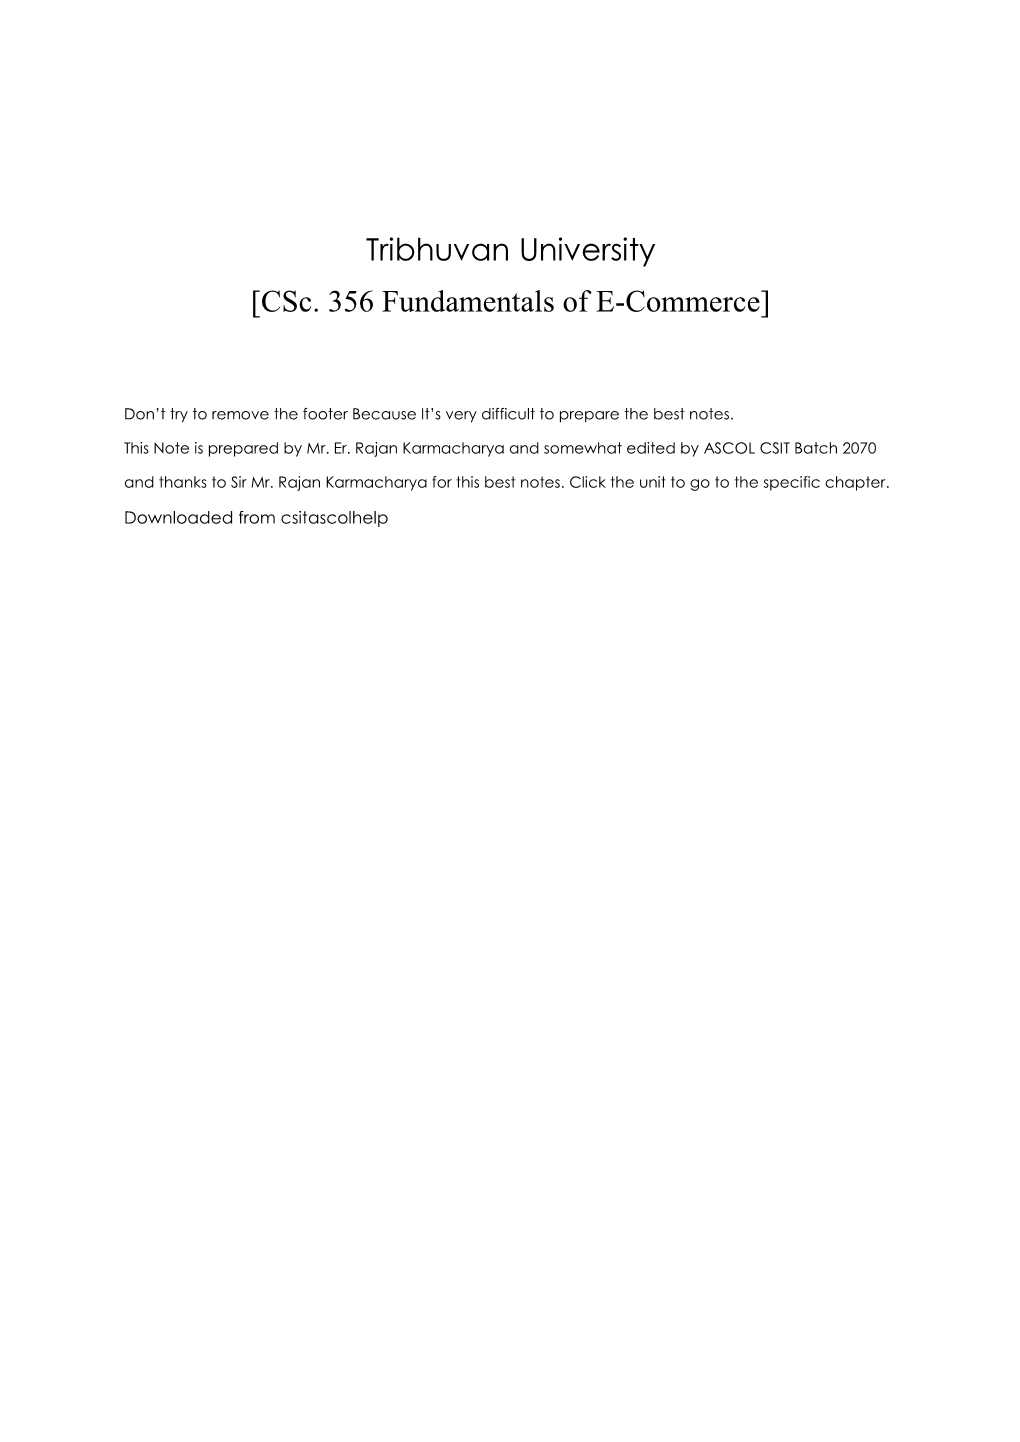 Tribhuvan University [Csc. 356 Fundamentals of E-Commerce]